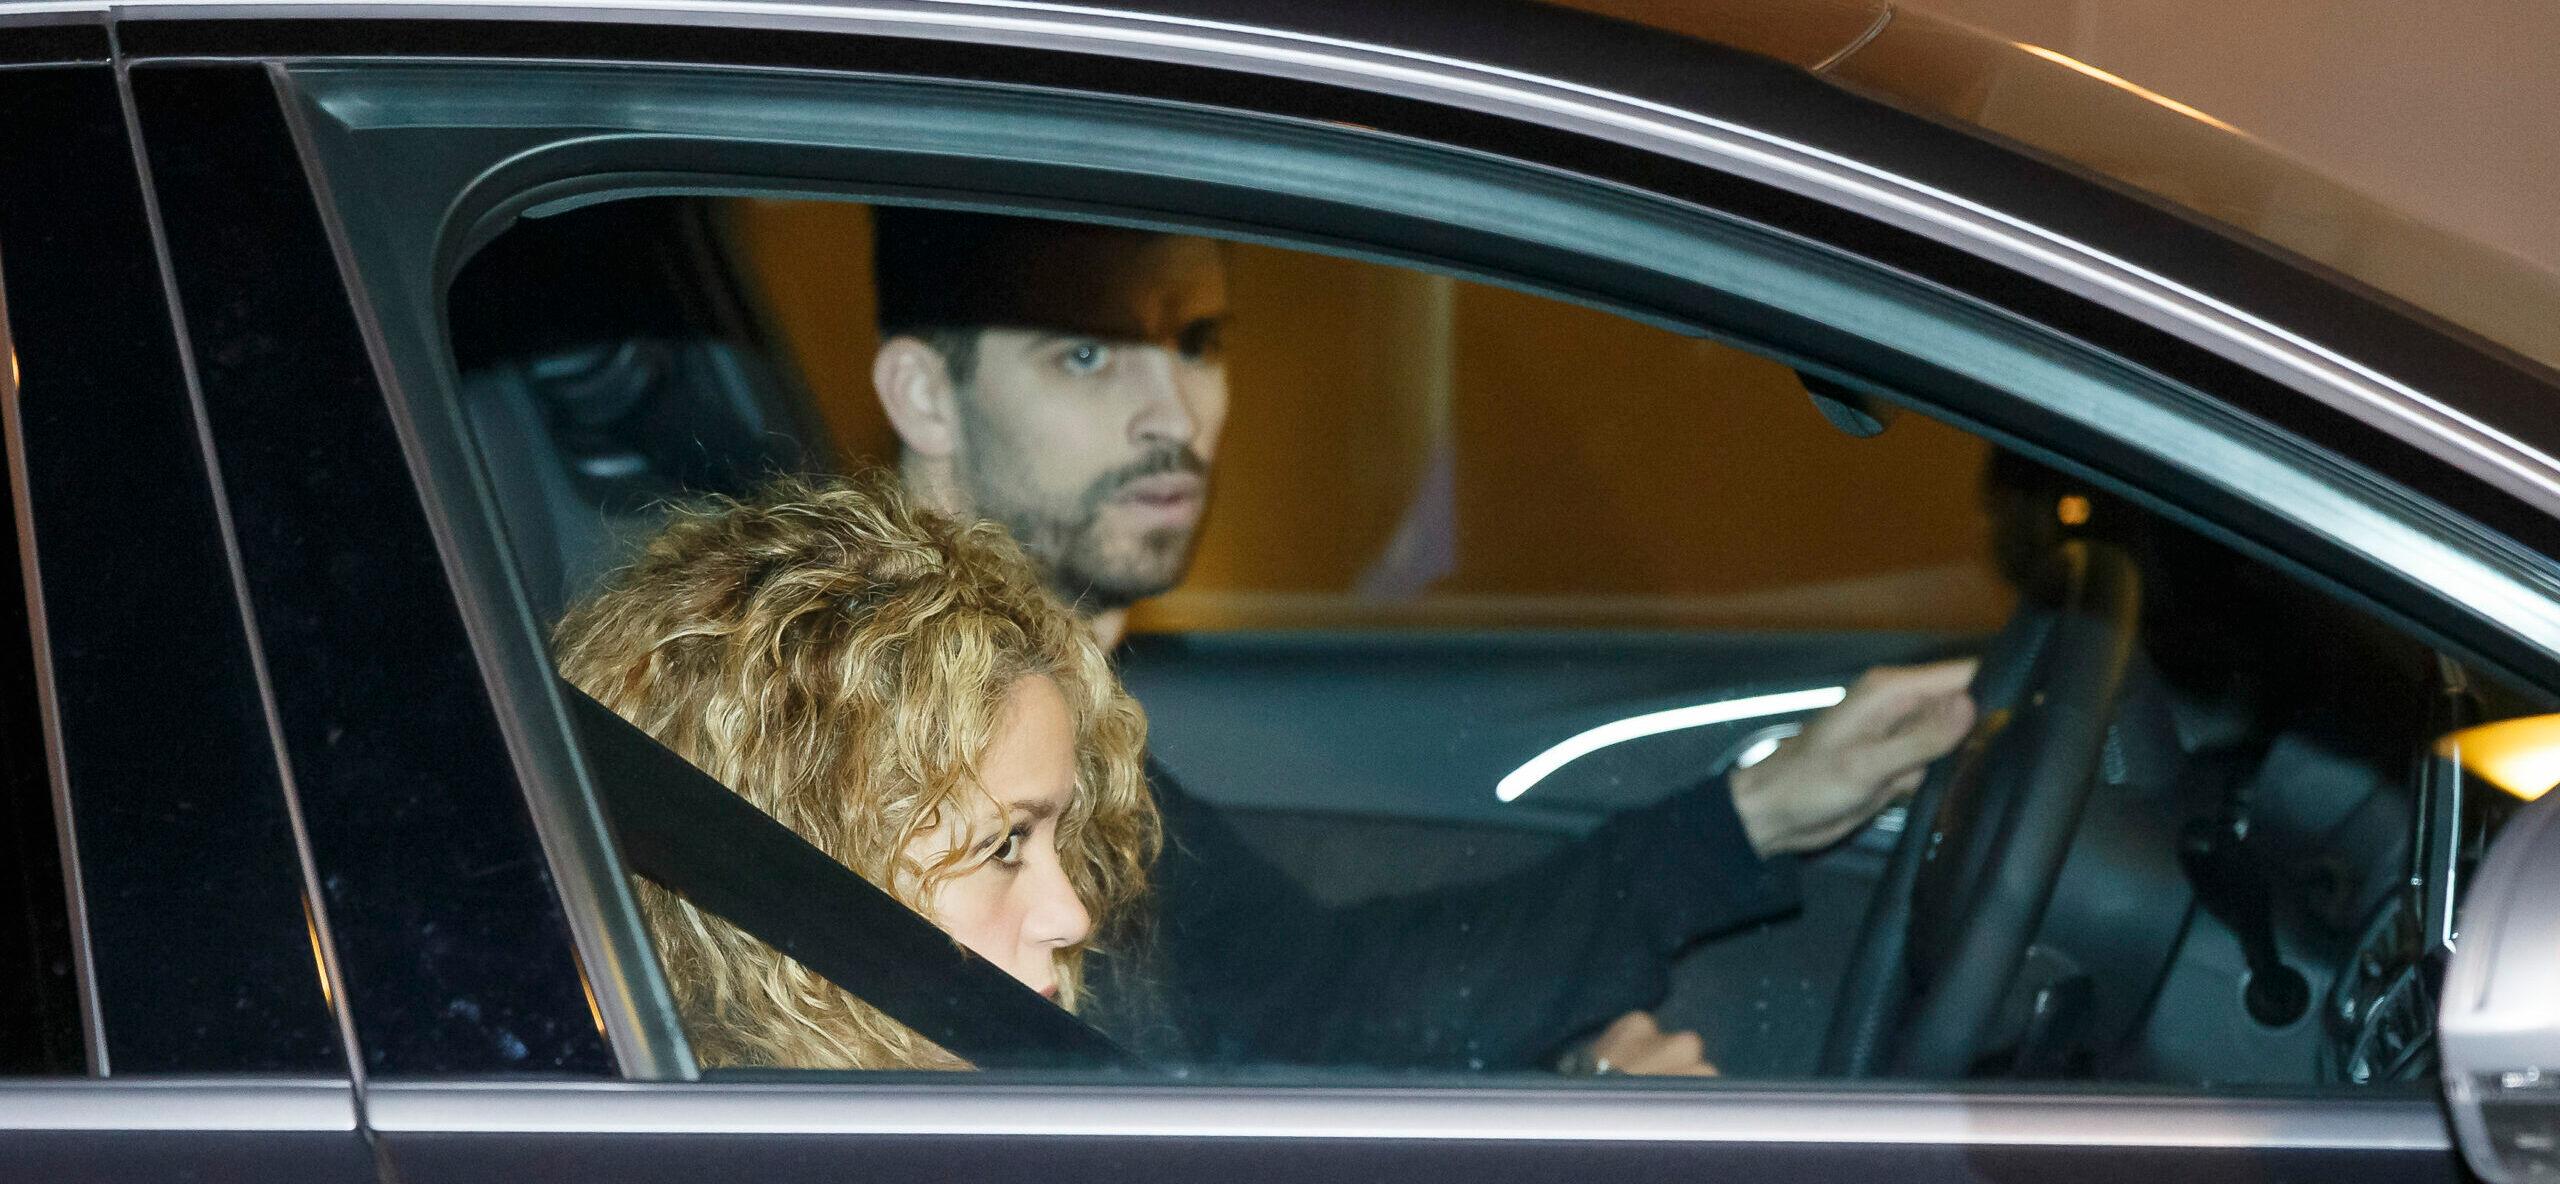 Soccer player Gerard Pique and singer Shakira in Barcelona